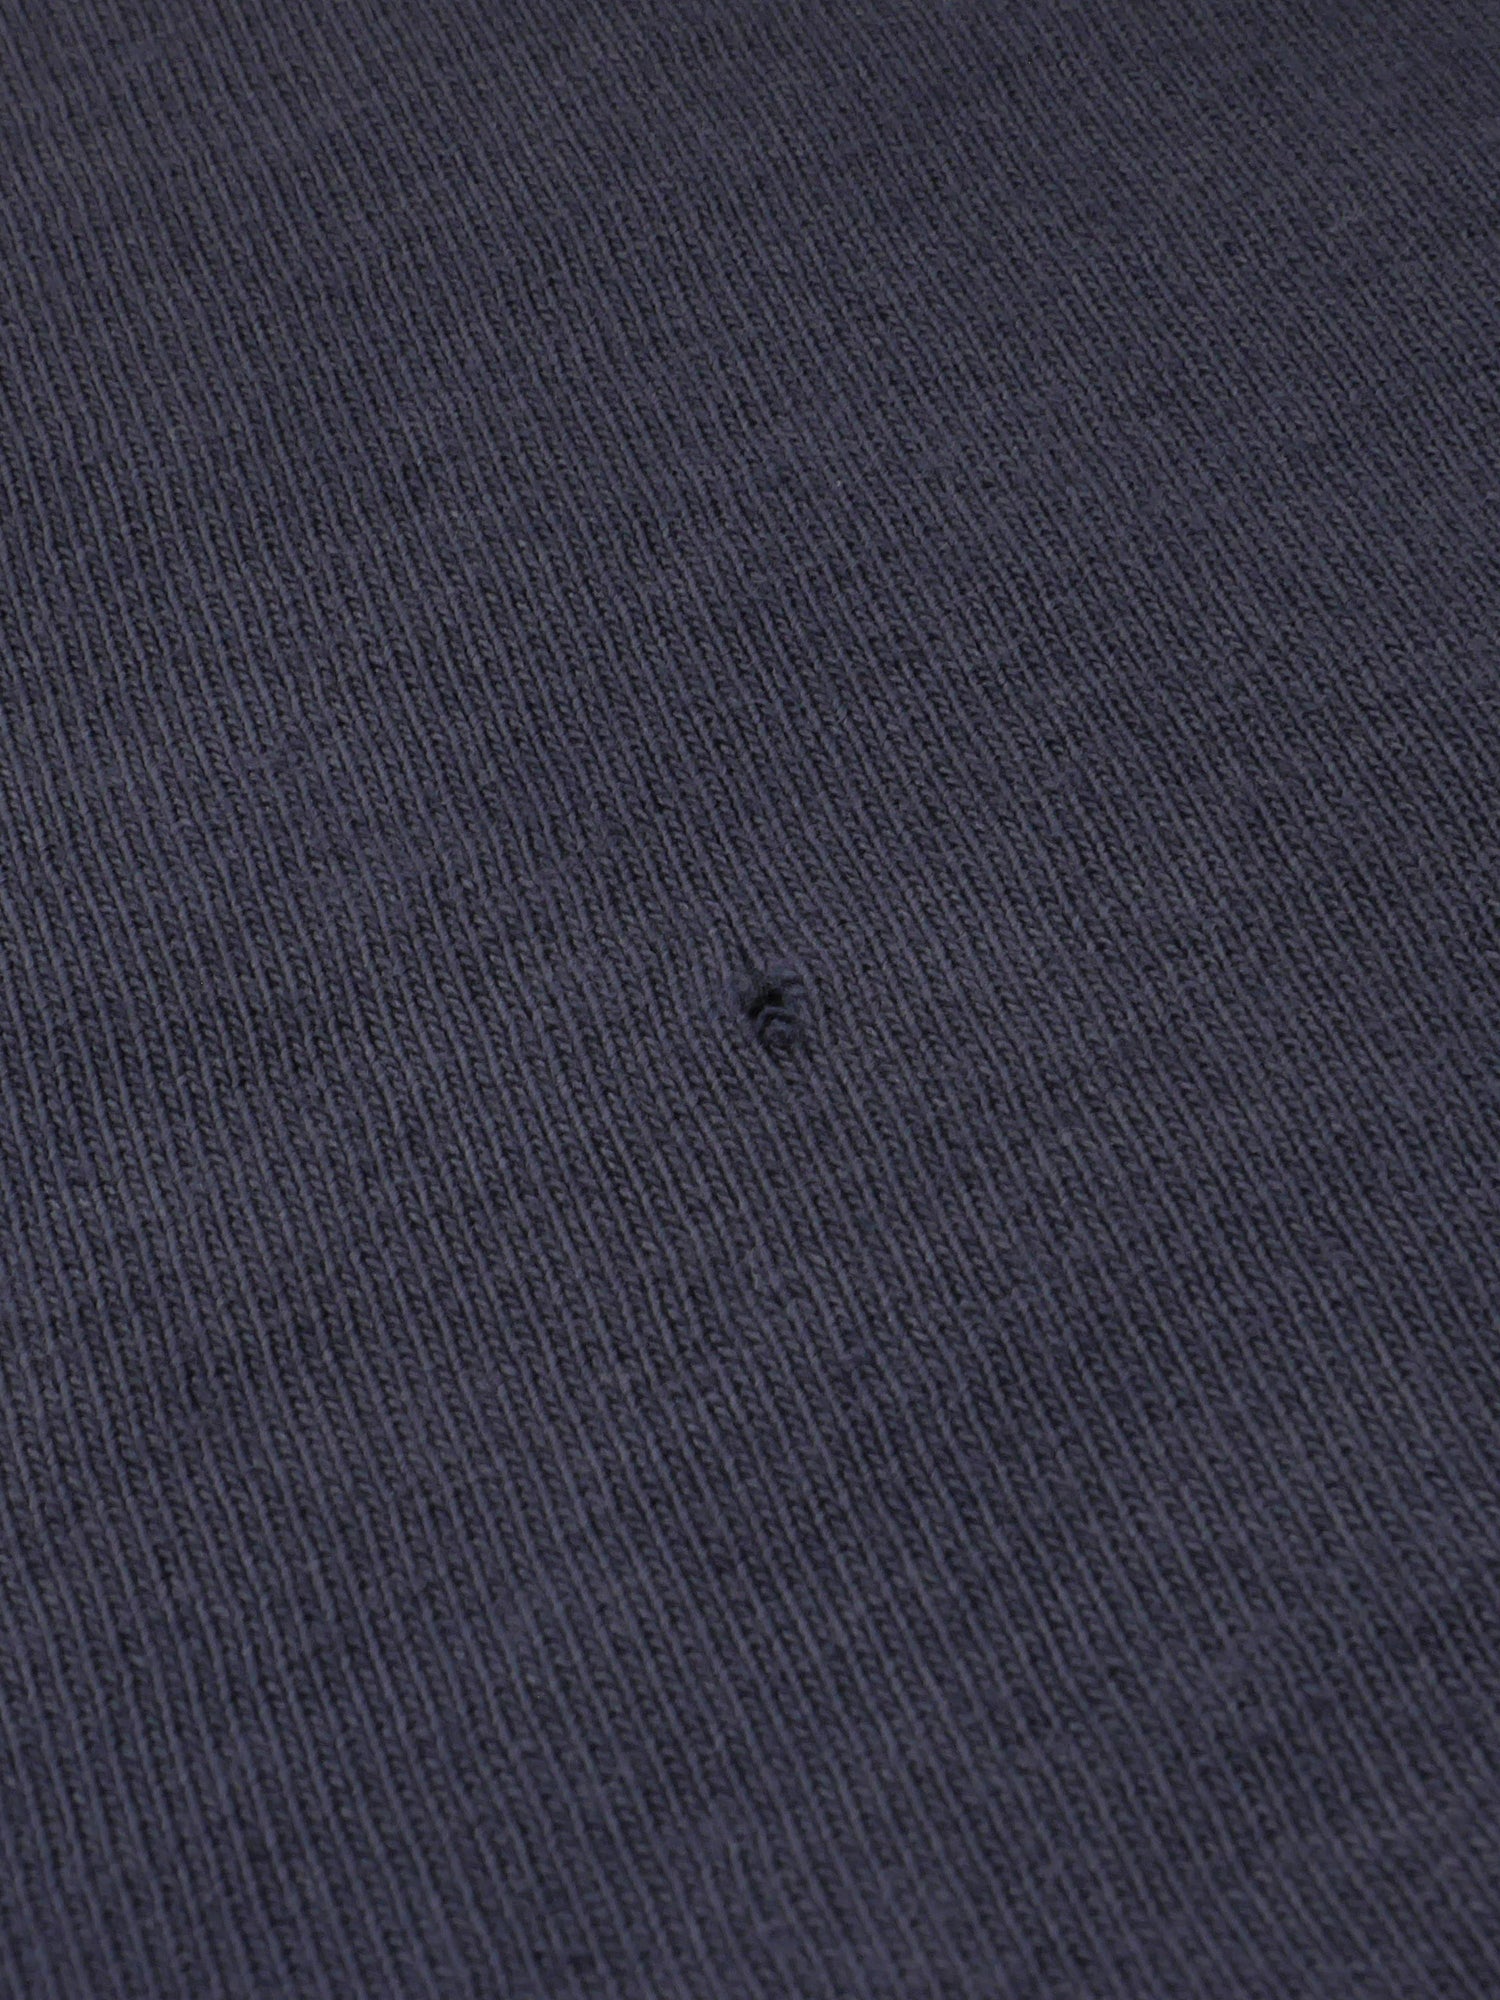 Nike blau T-Shirt - Peeces